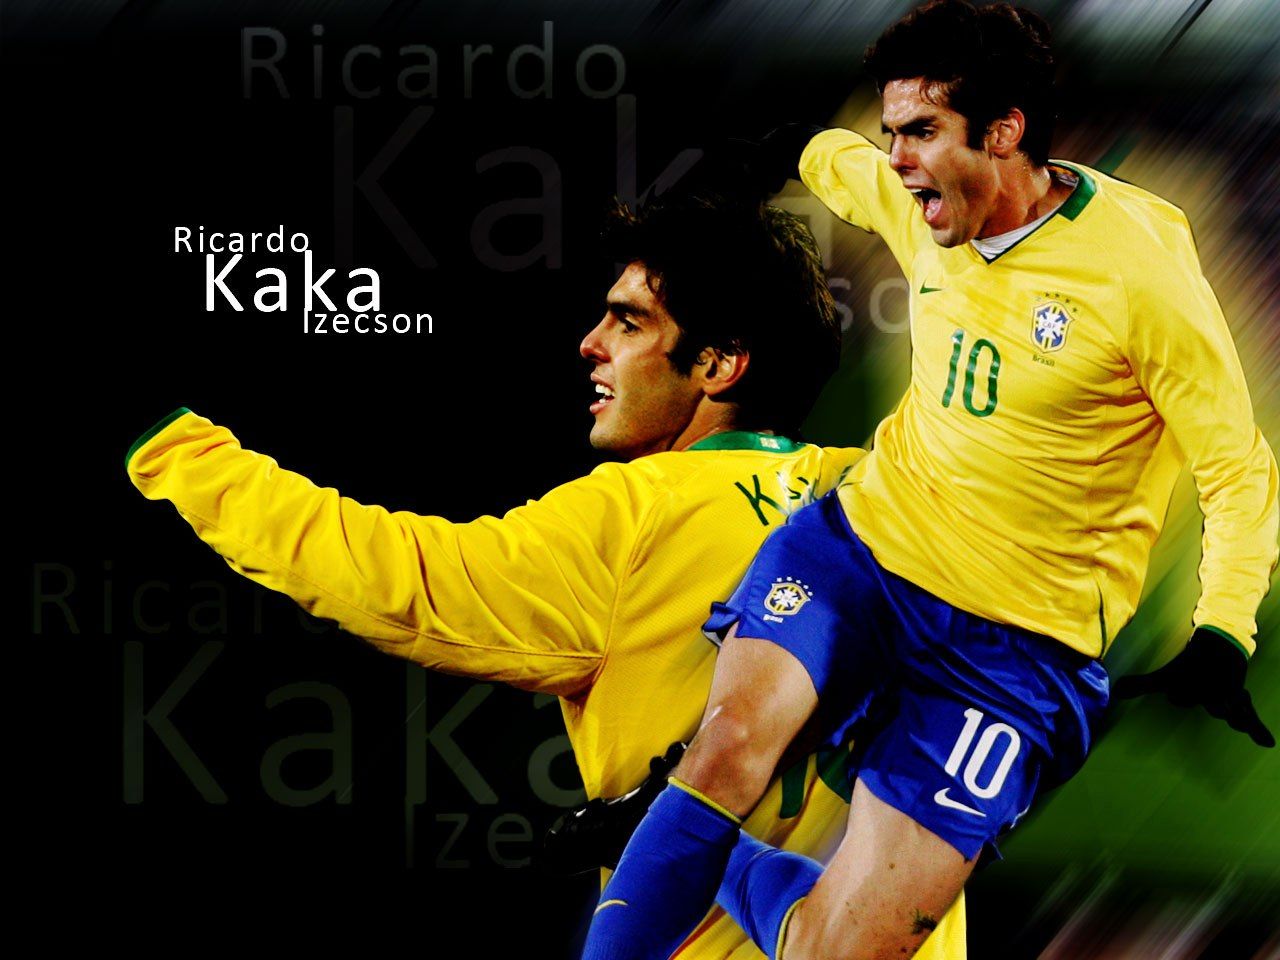 Ricardo Kaka Wallpaper HD. Ricardo kaka, Best football players, Play soccer